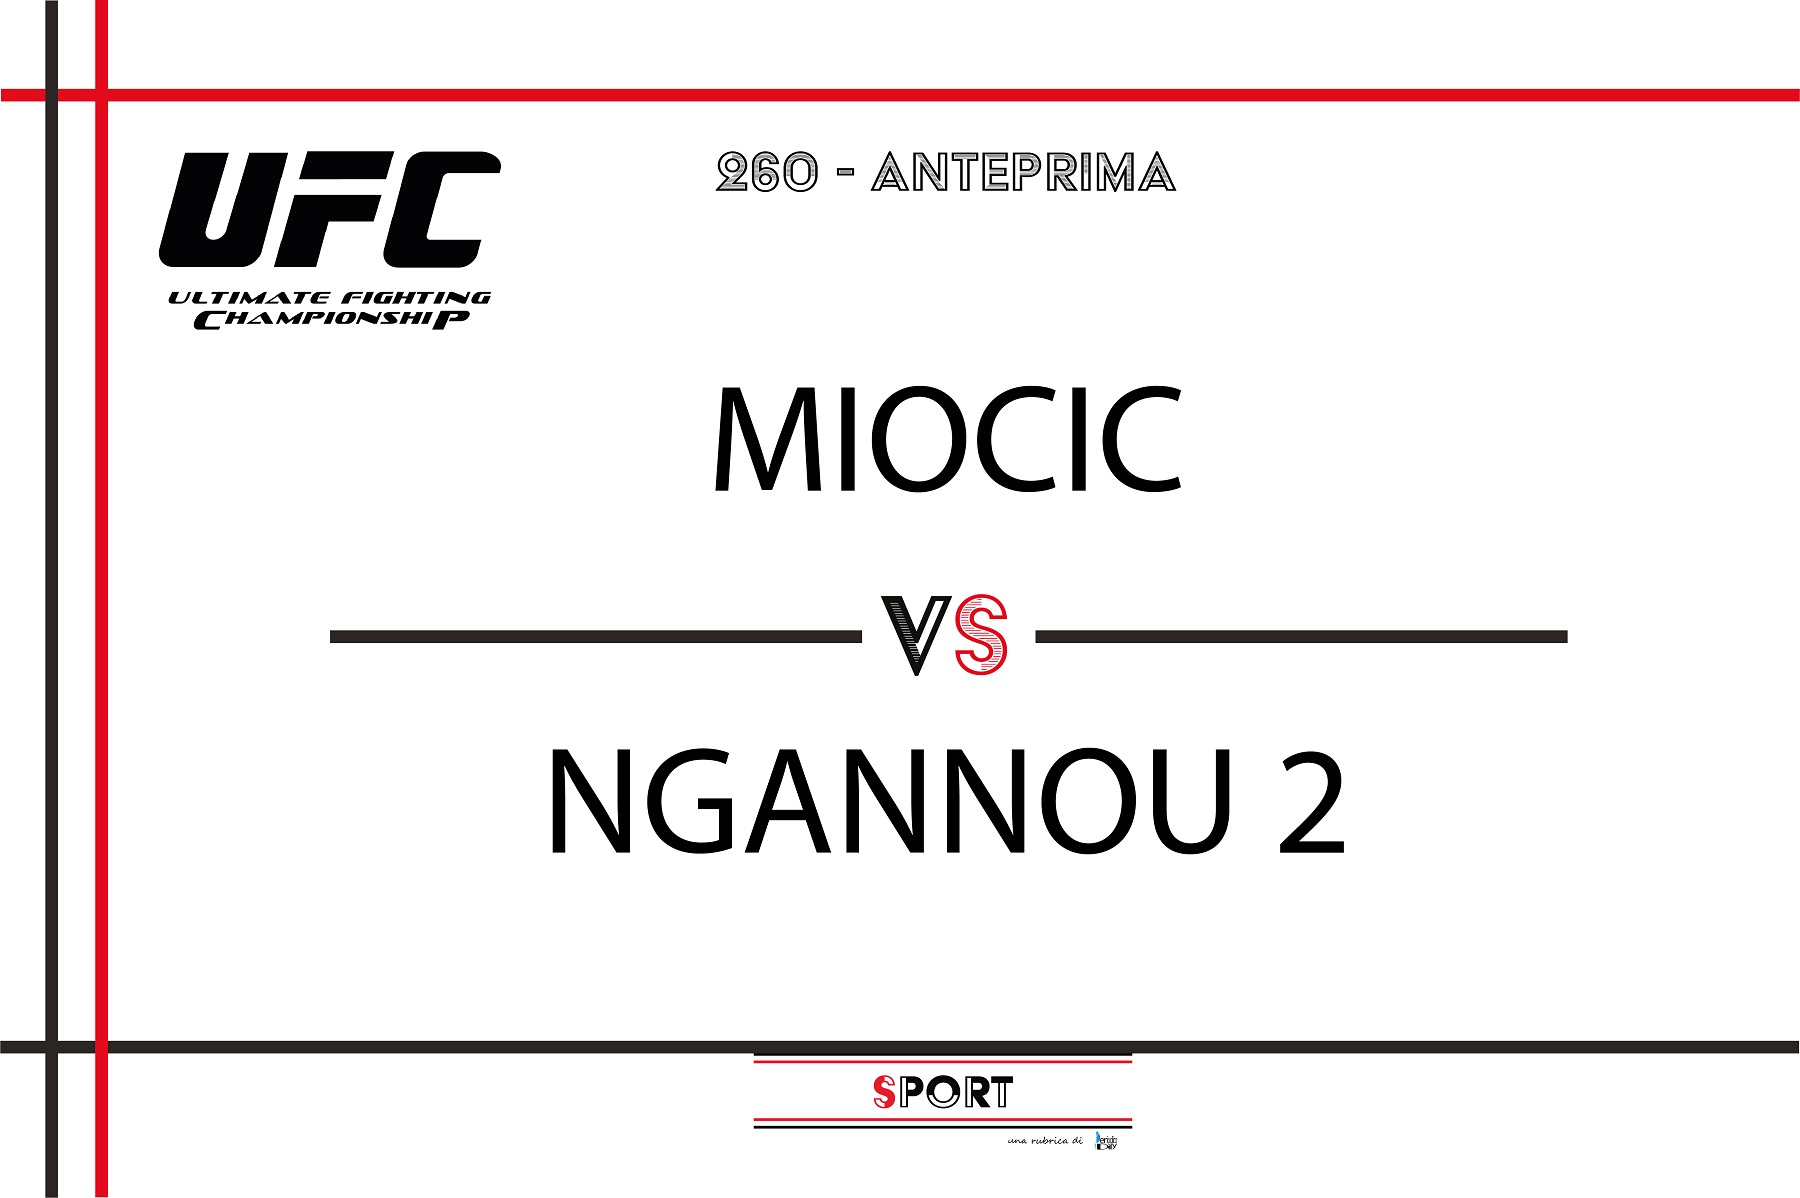 UFC 260 - Anteprima - Miocic Vs Ngannou 2 - PeriodicoDaily ...